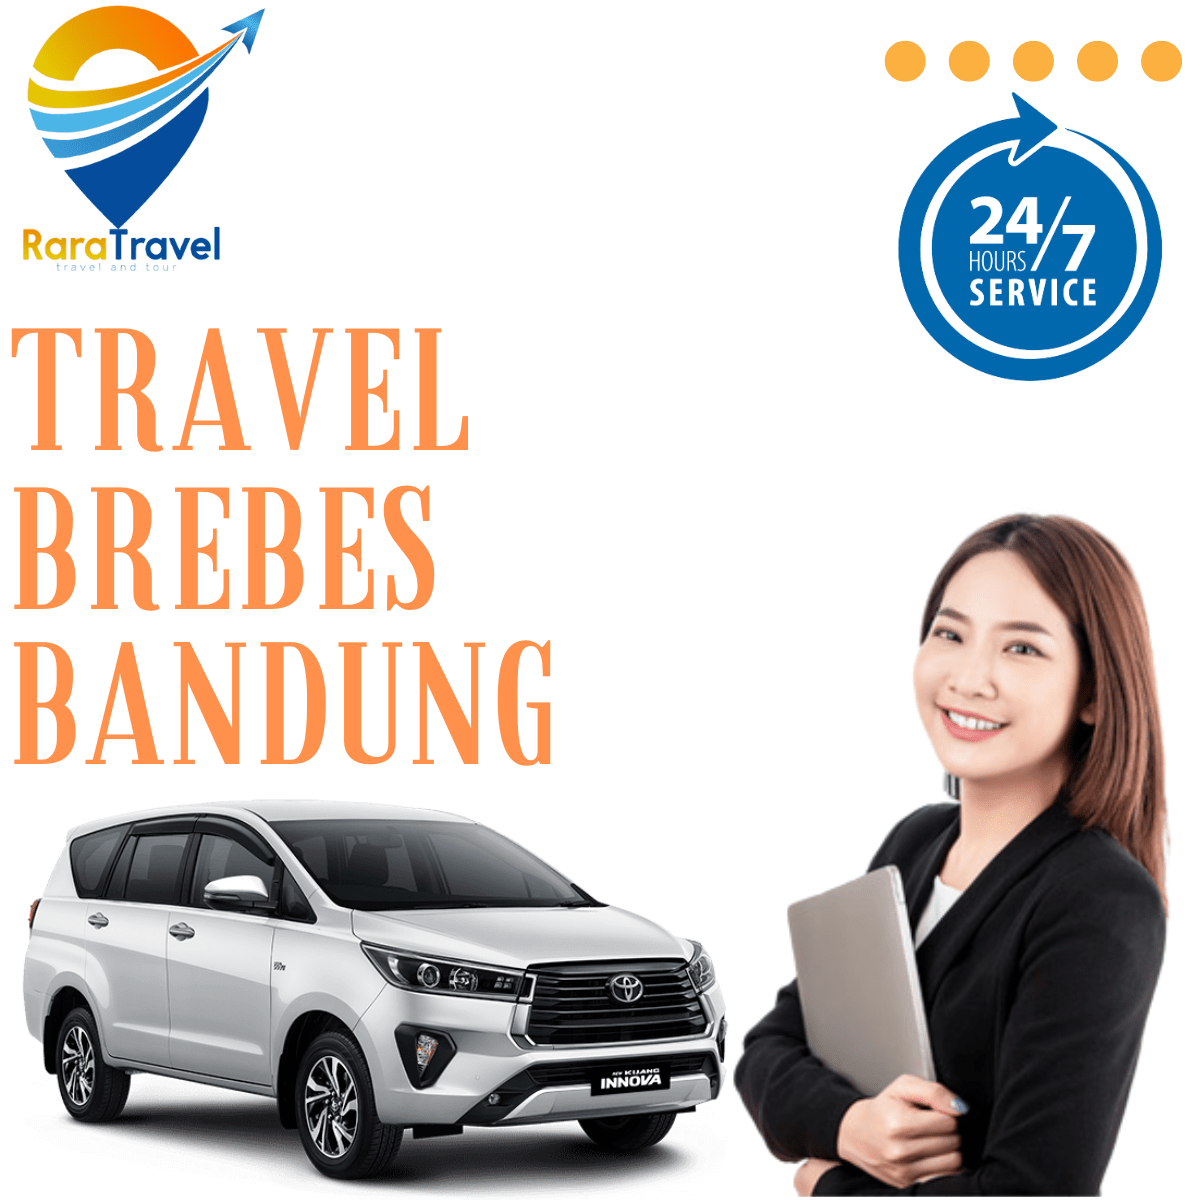 Travel Brebes Bandung Murah Hiace via Toll - RaraTravel.ID